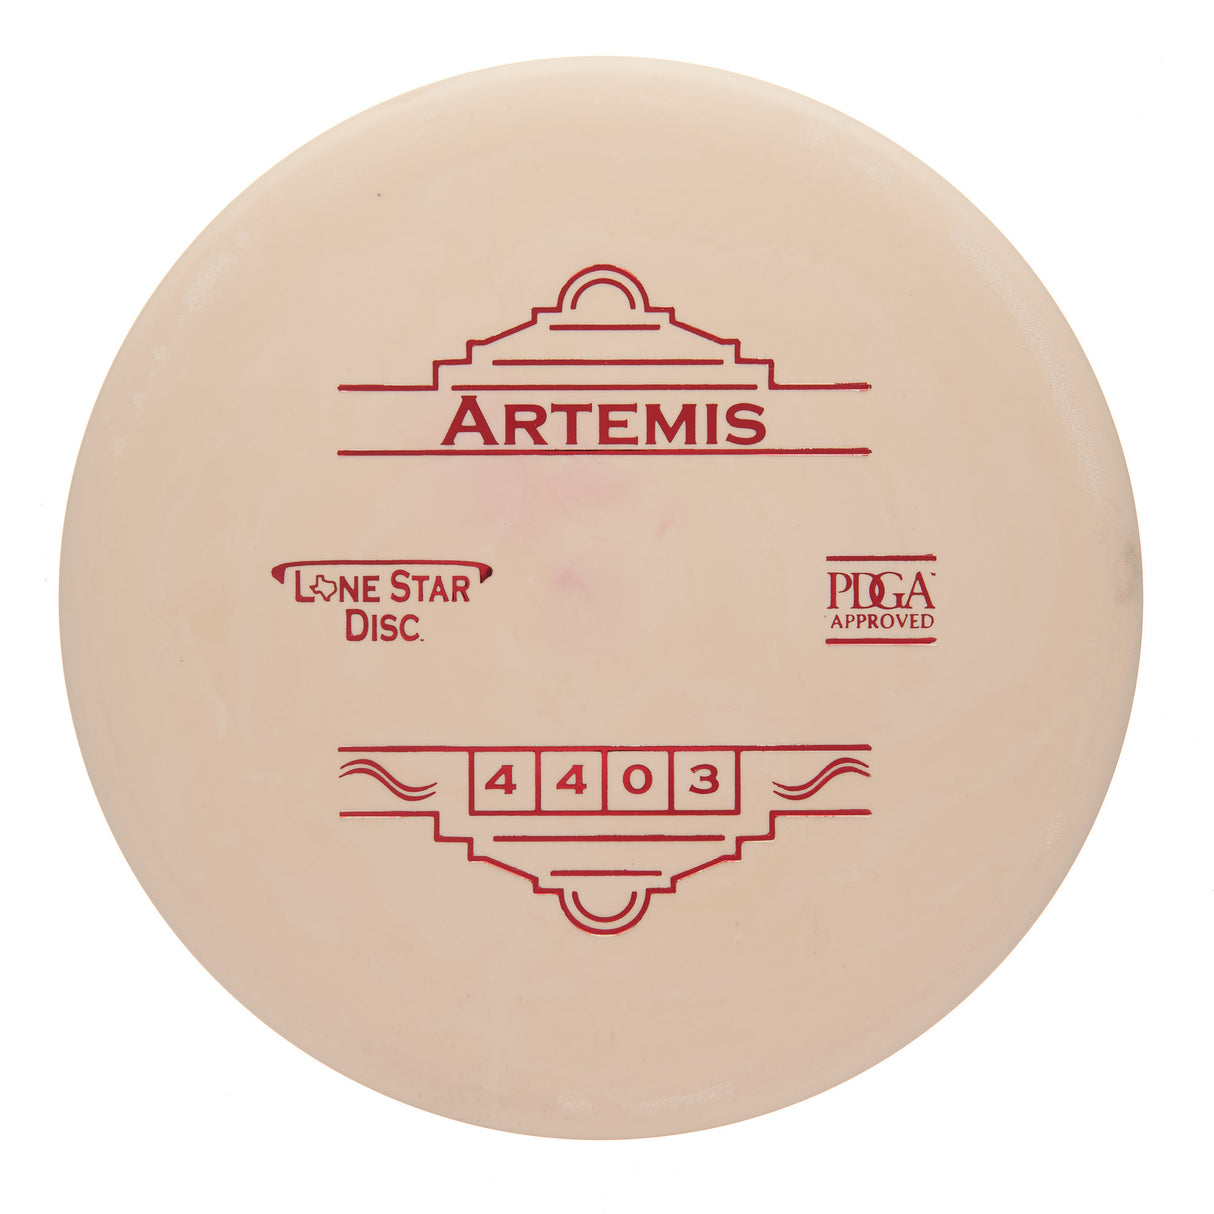 Lone Star Disc Artemis - Delta 2 170g | Style 0003